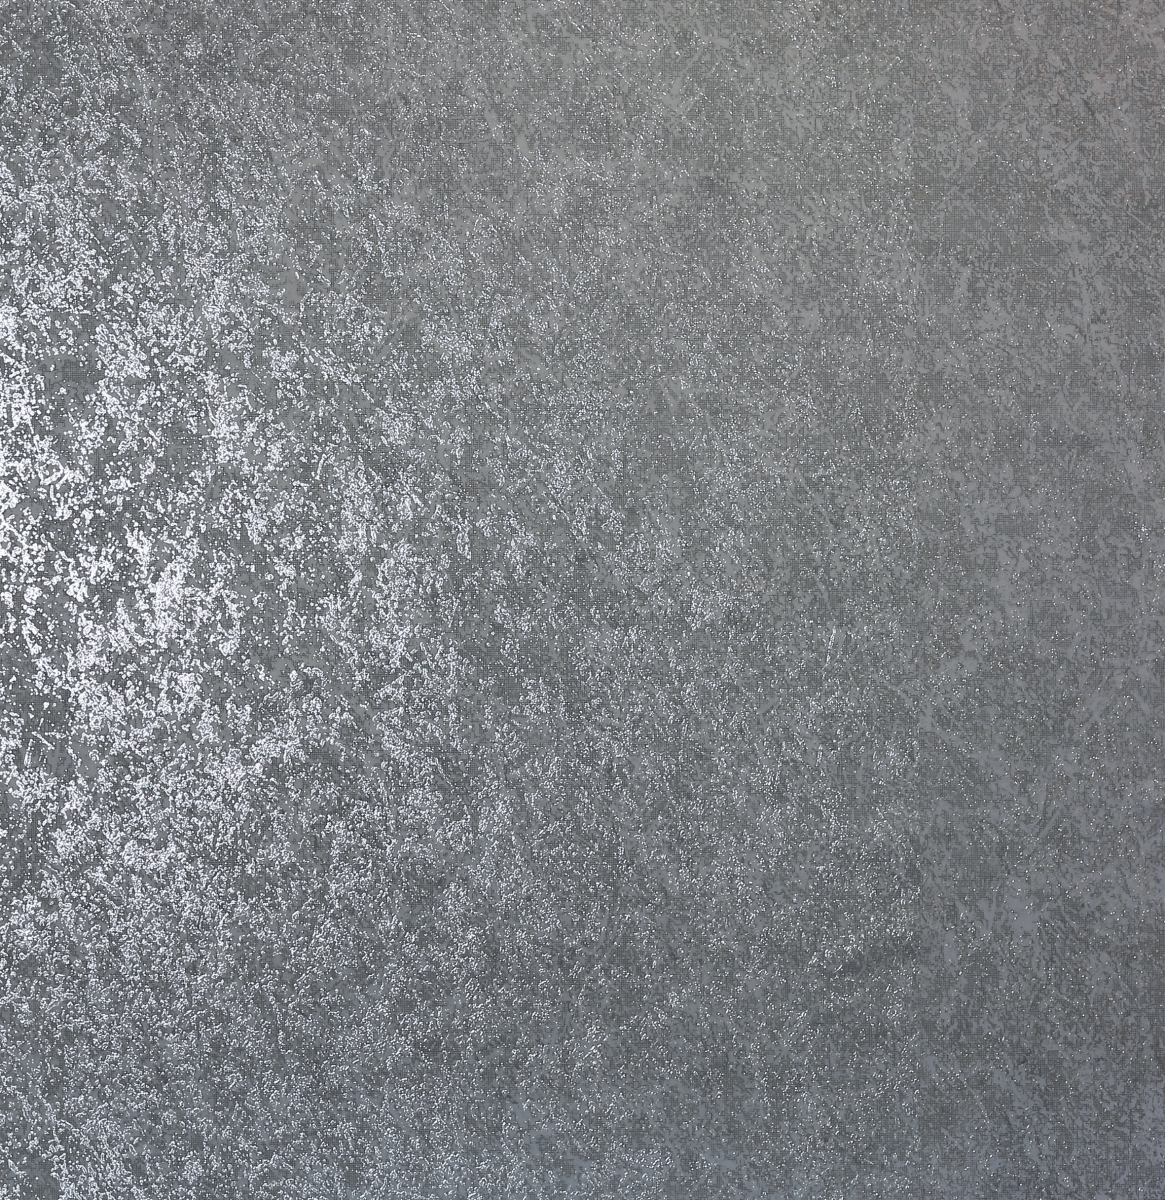 903307 Texture Grey Kiss Foil Non-woven Wallpaper, Charcoal